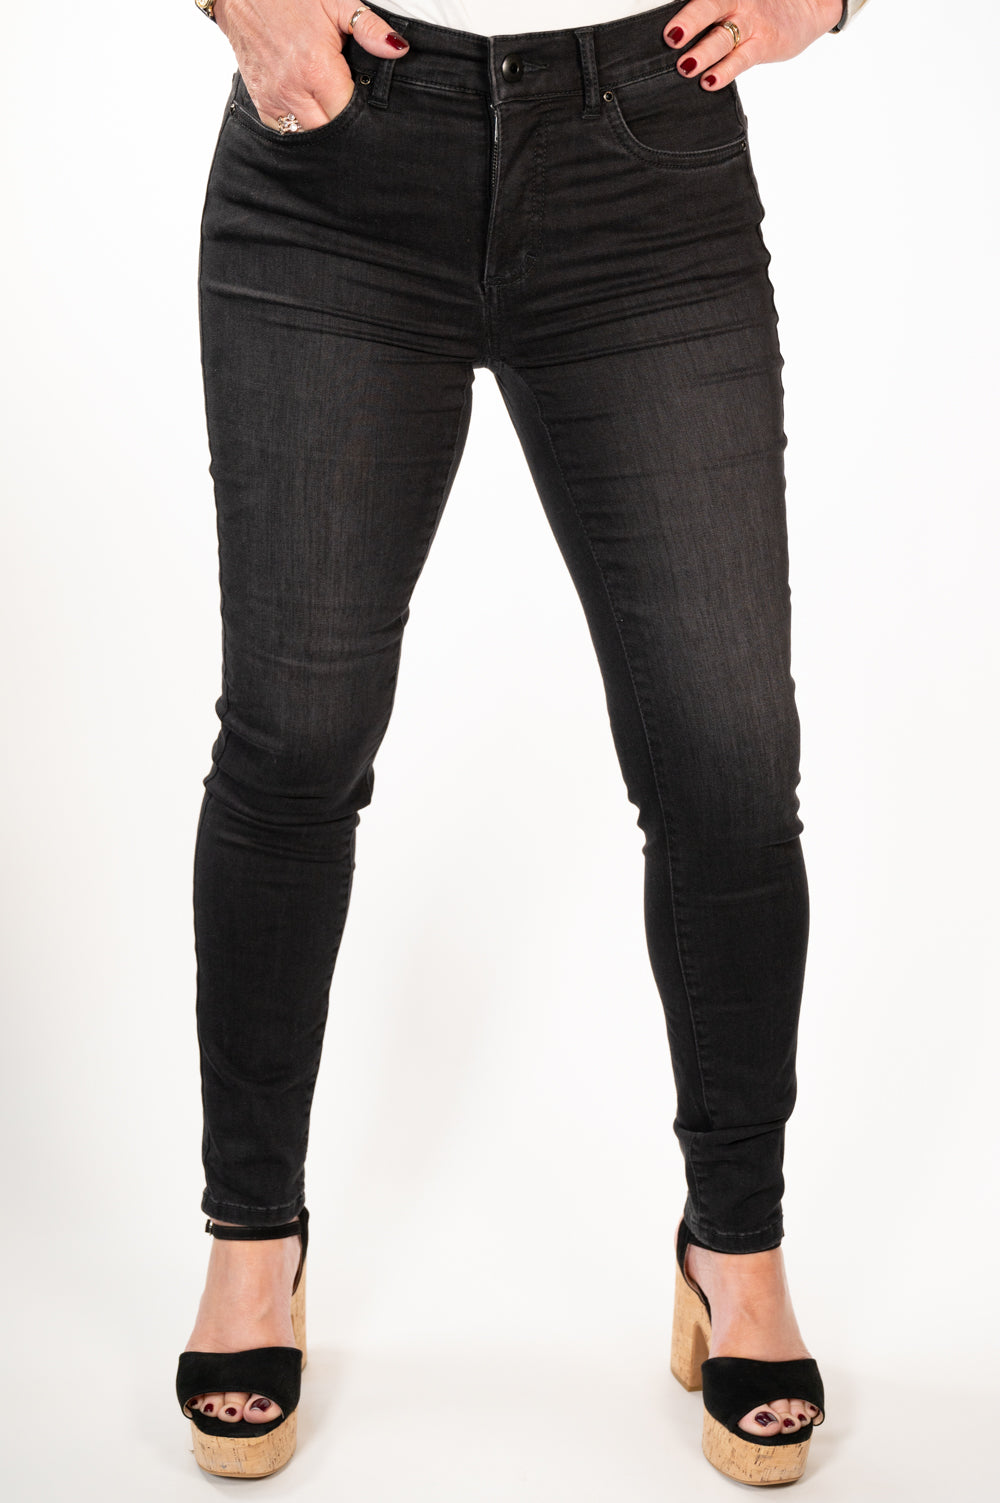 Anna Montana Magic Denim Skinny Jeans (5000) - Used Black